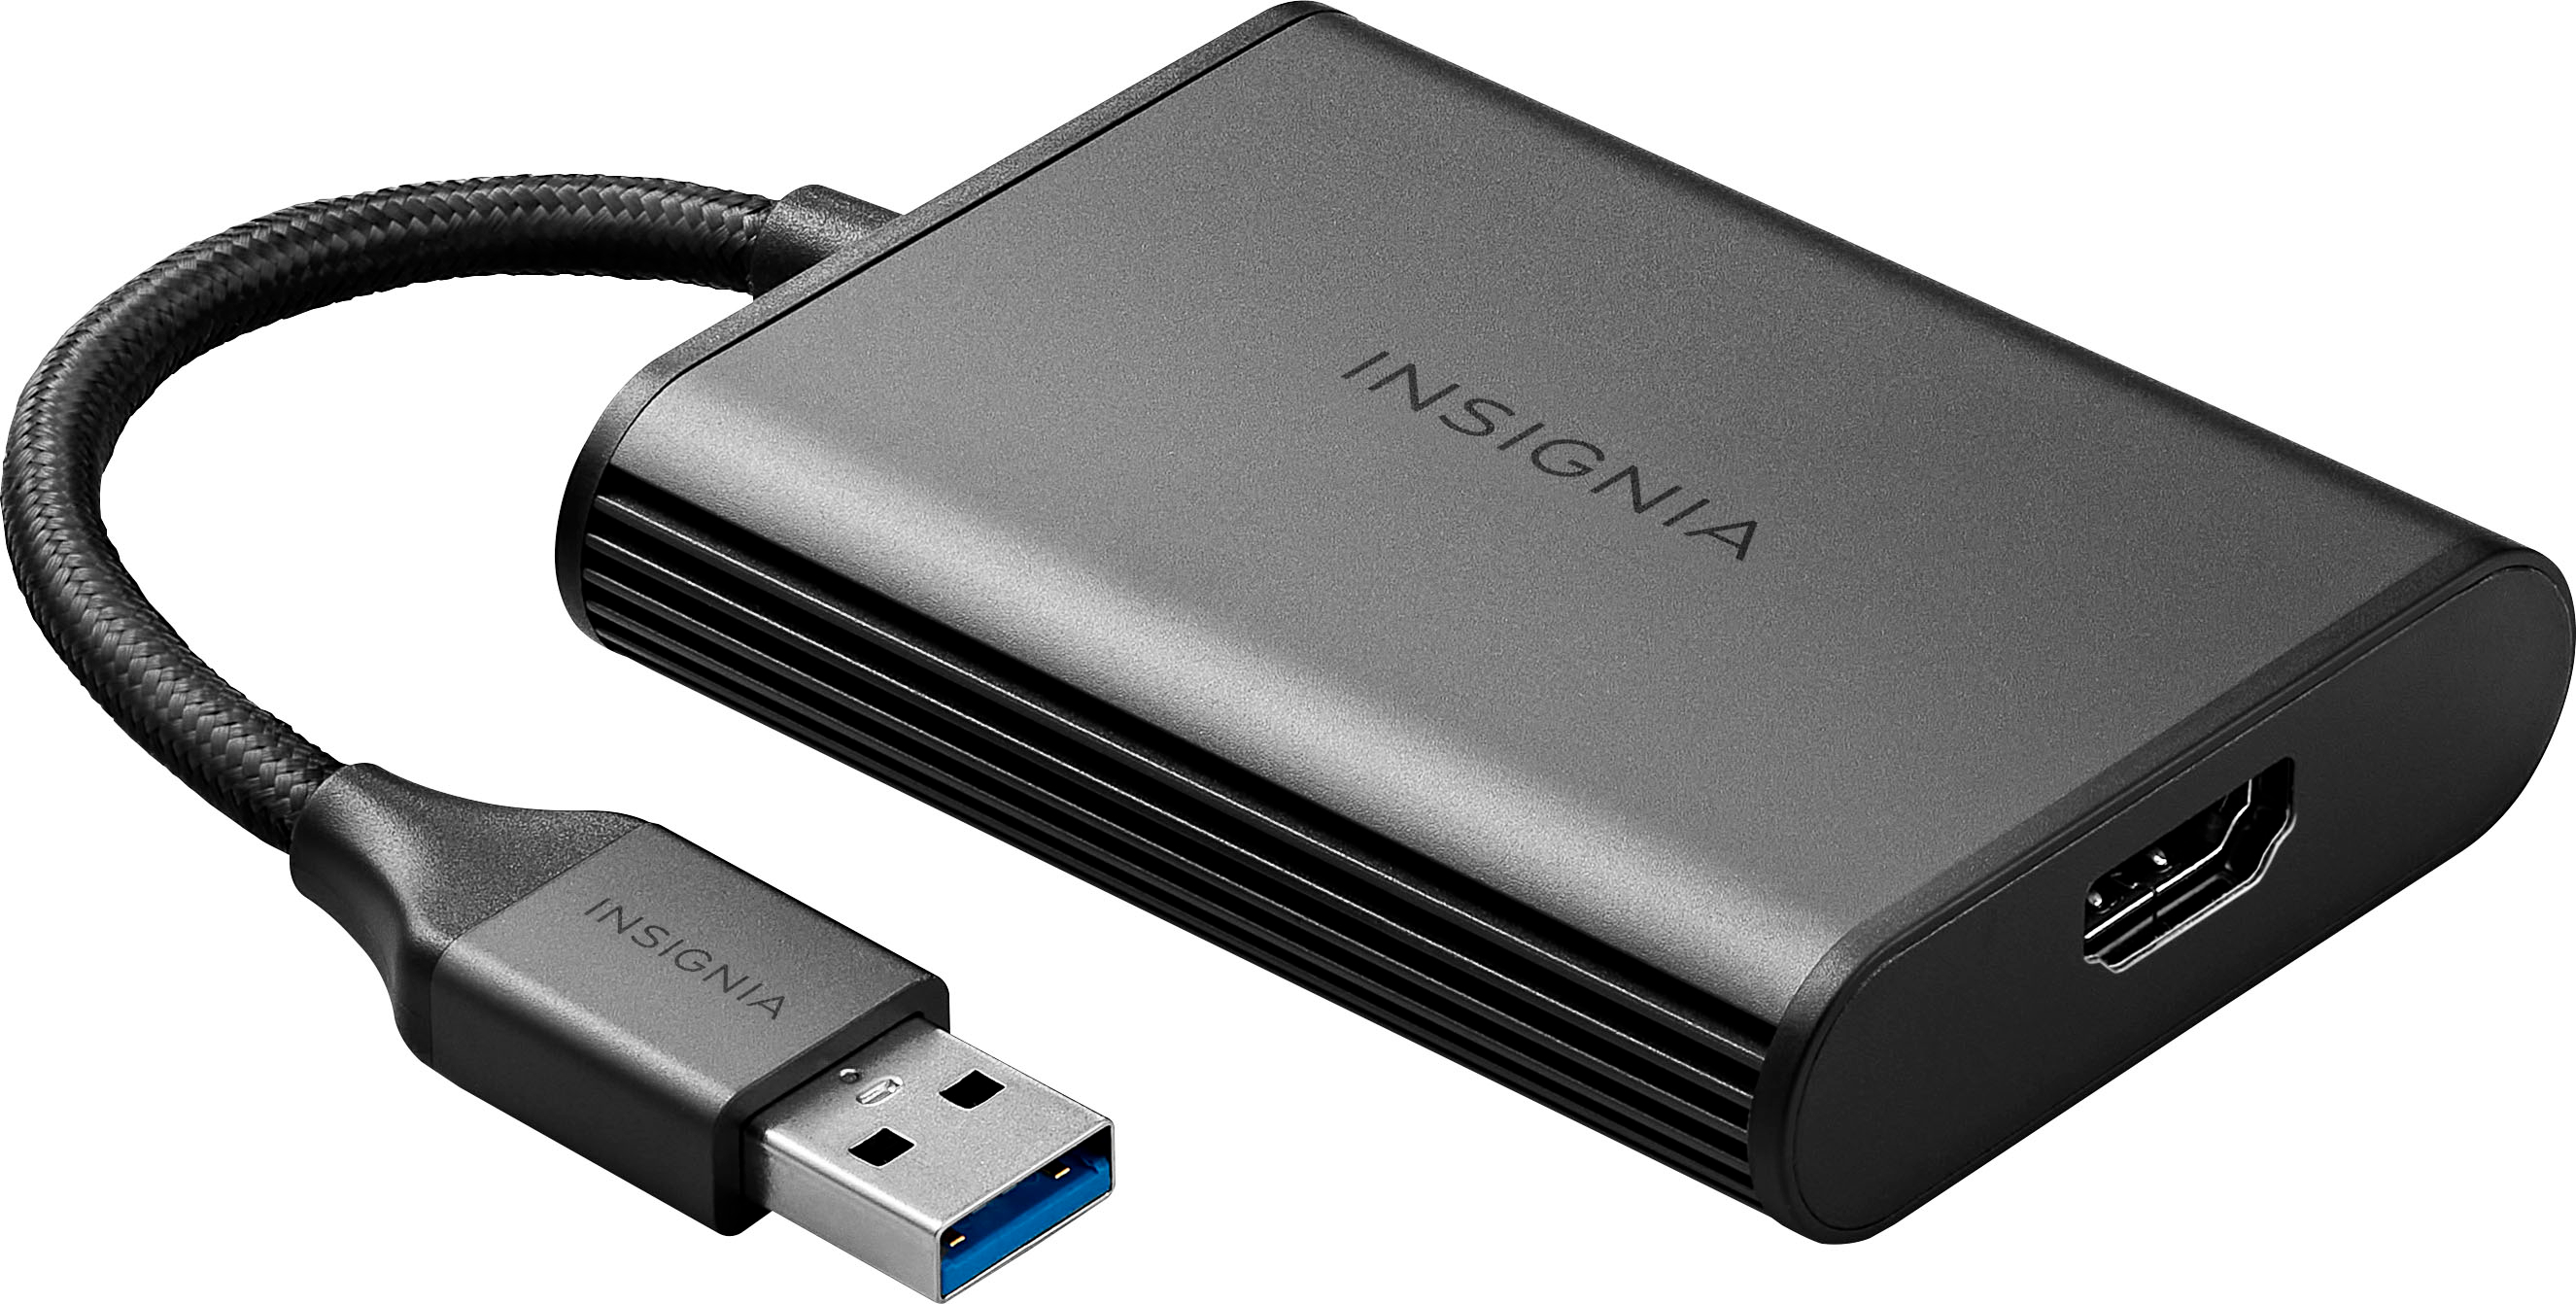 Insignia™ USB to VGA Adapter Black NS-PUV308 - Best Buy